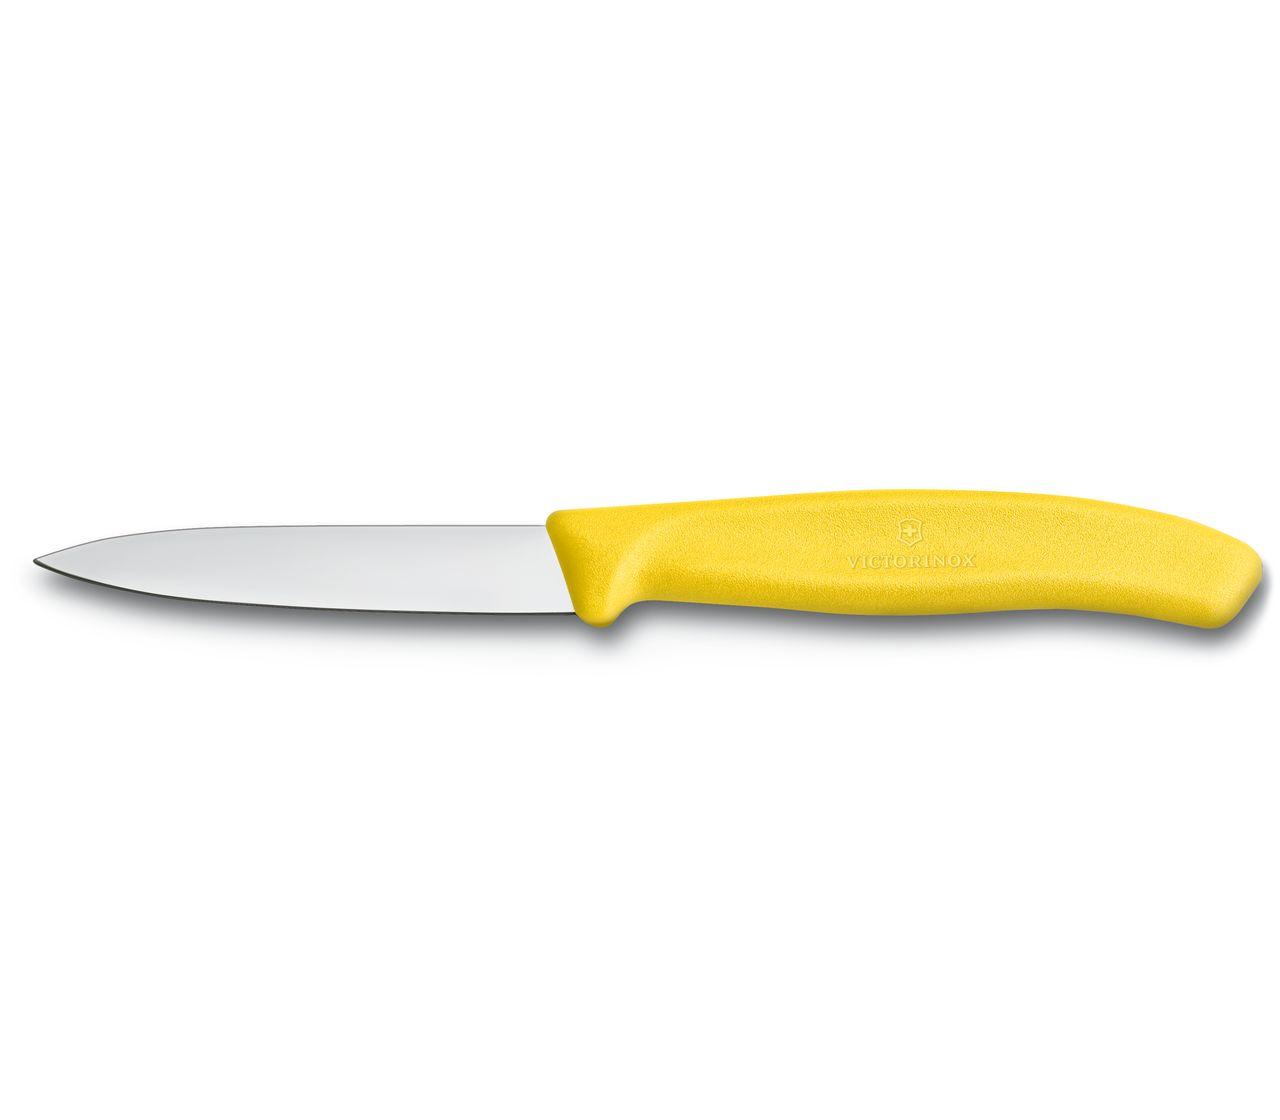 100% Genuine! VICTORINOX SWISS Made 8cm Paring & Vege Knife Black!